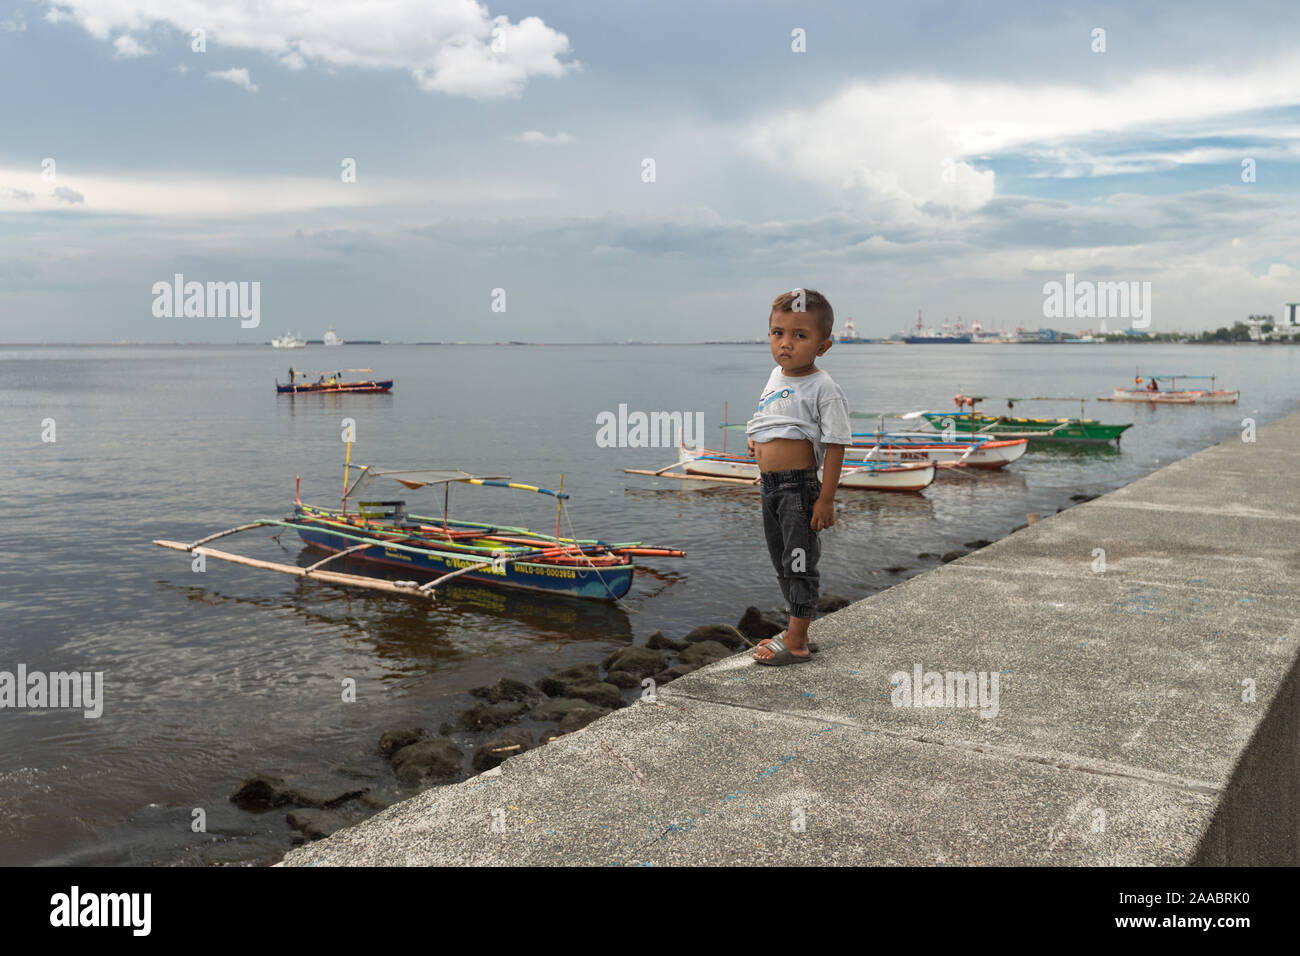 Manila, Philippines - July 7, 2017: Manila bay, boy look at the camera, sea and boats at background Stock Photo